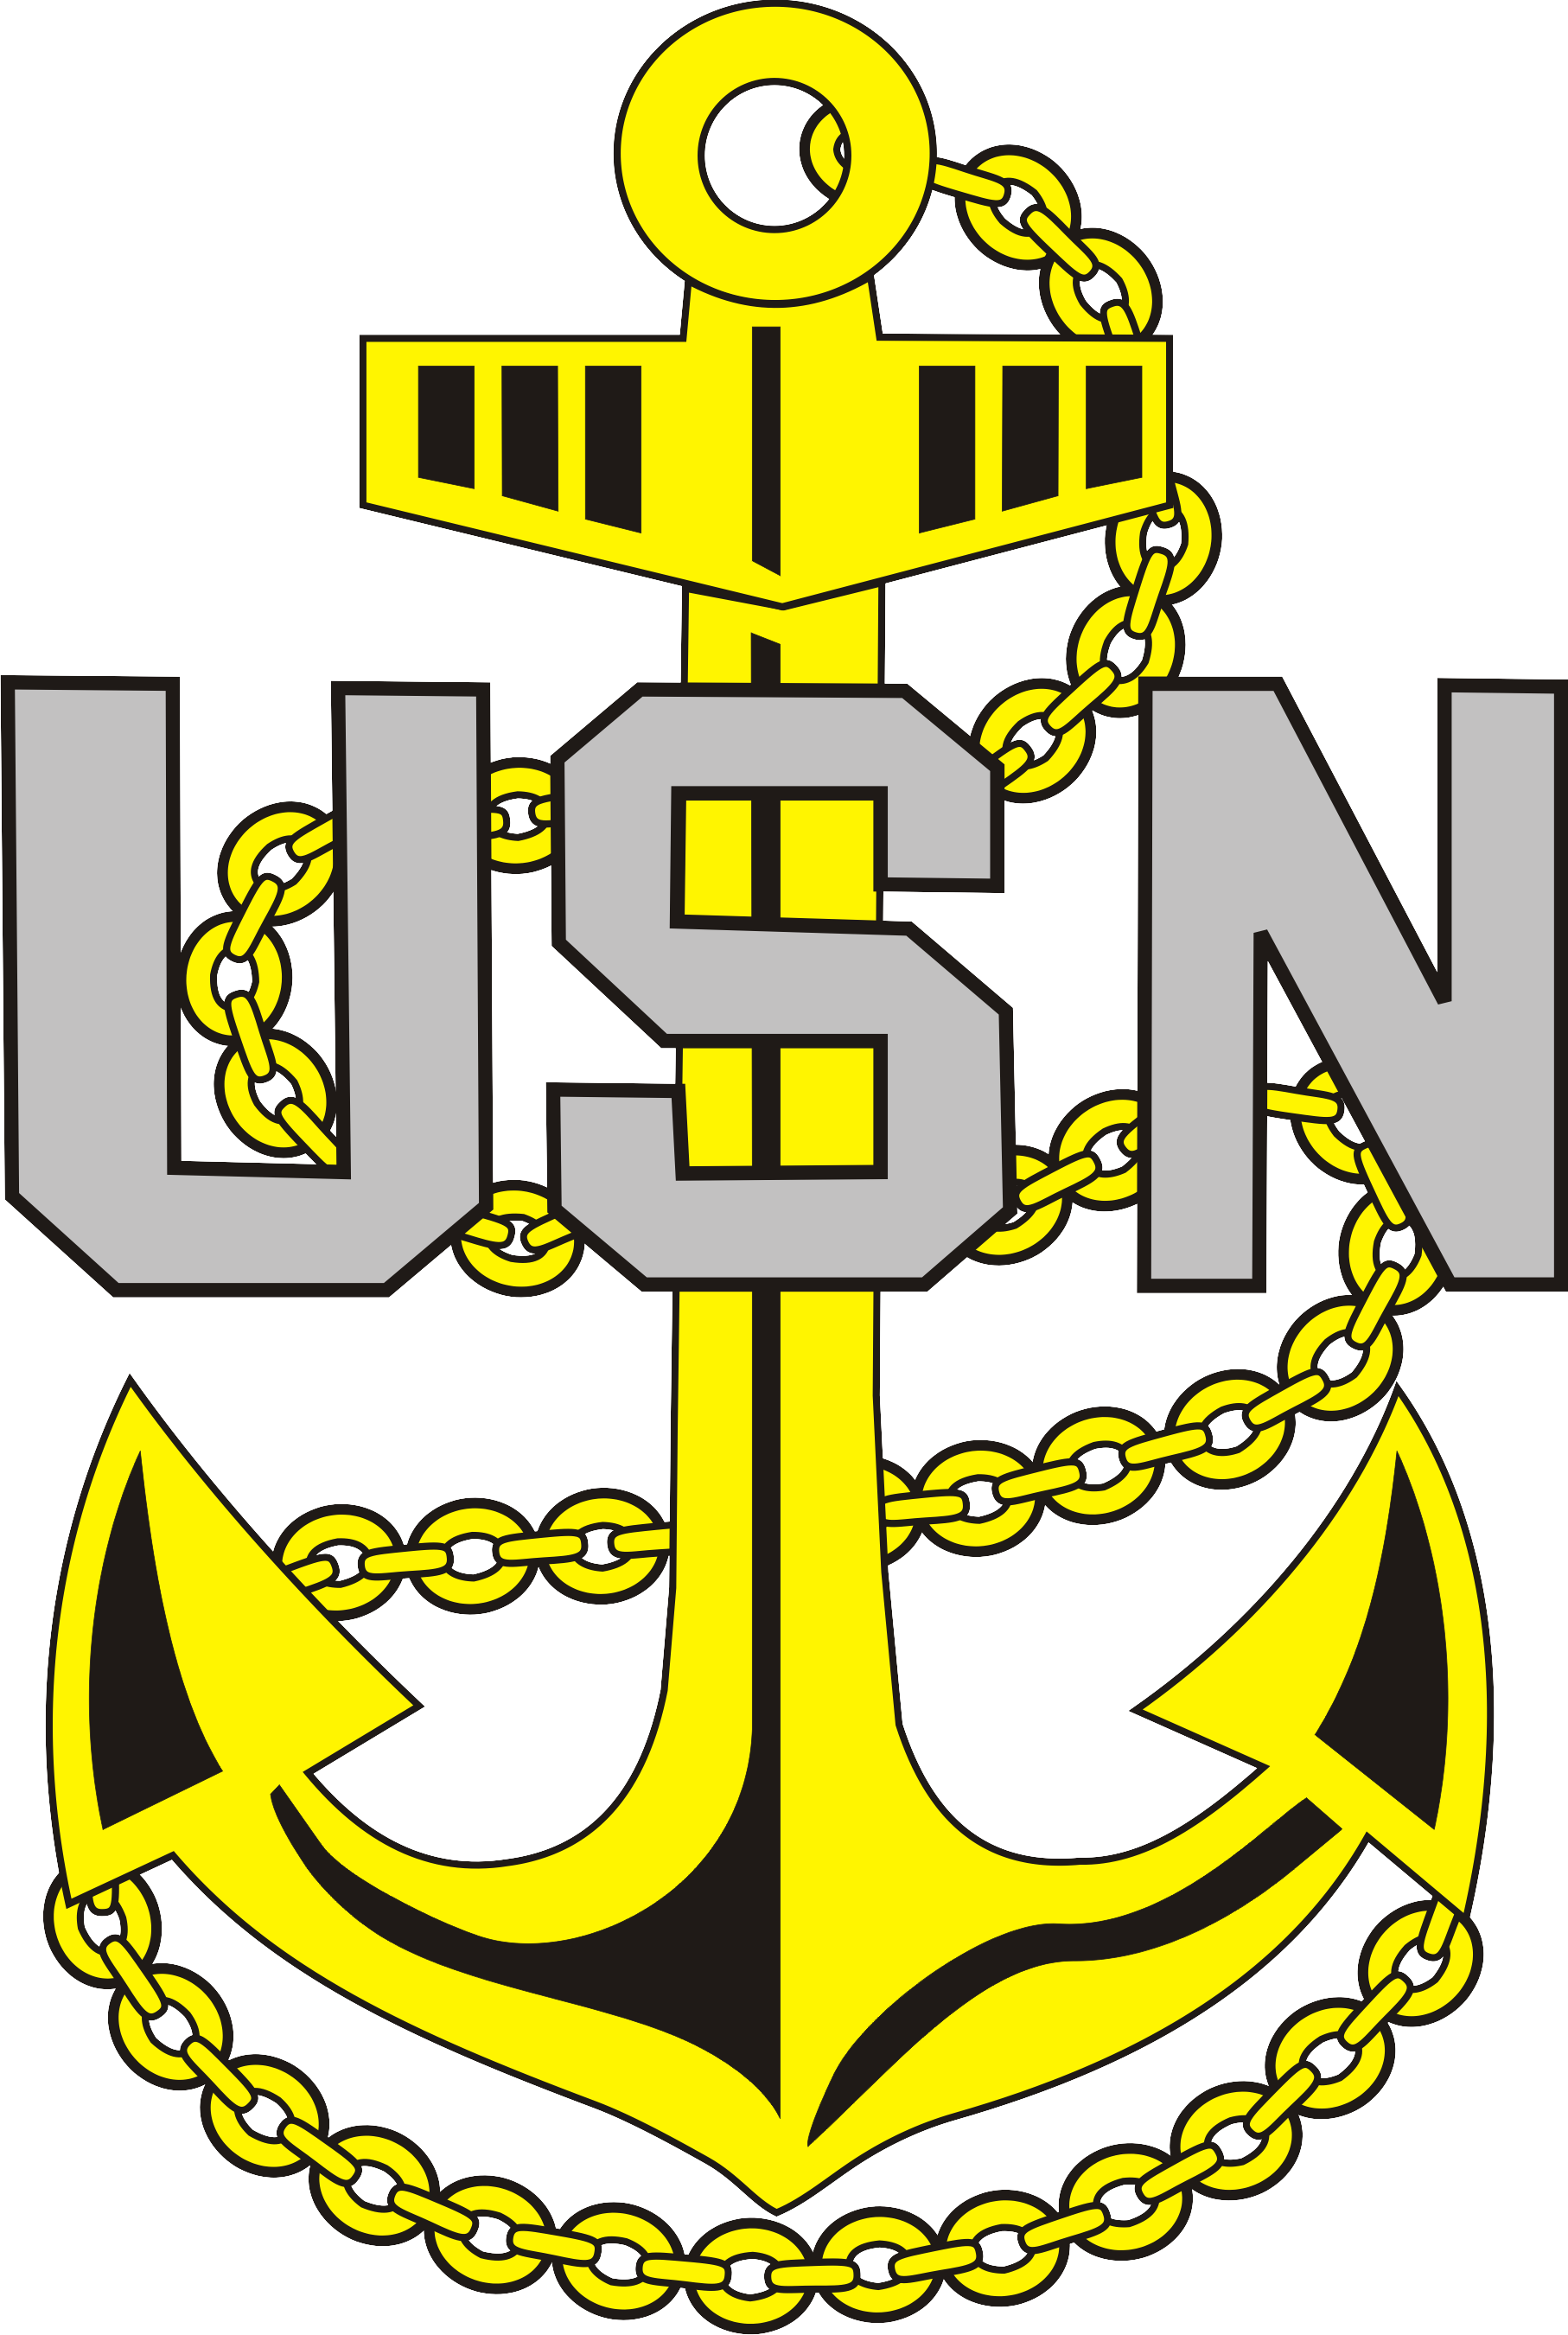 Fabric logo usn custom. Military clipart navy seals